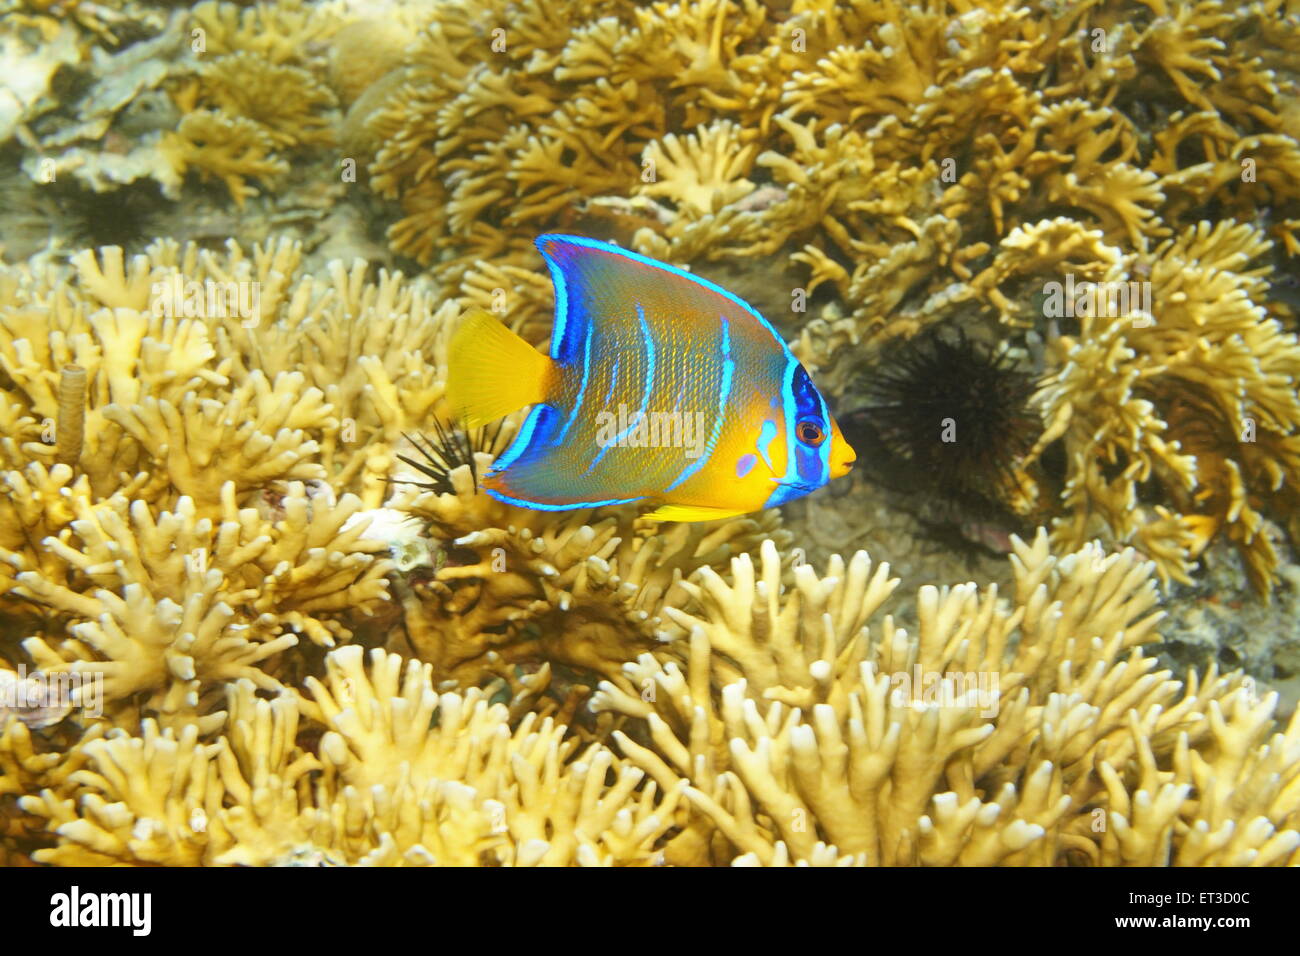 Caribbean reef fish underwater, juvenile Queen angelfish, Holacanthus ciliaris Stock Photo